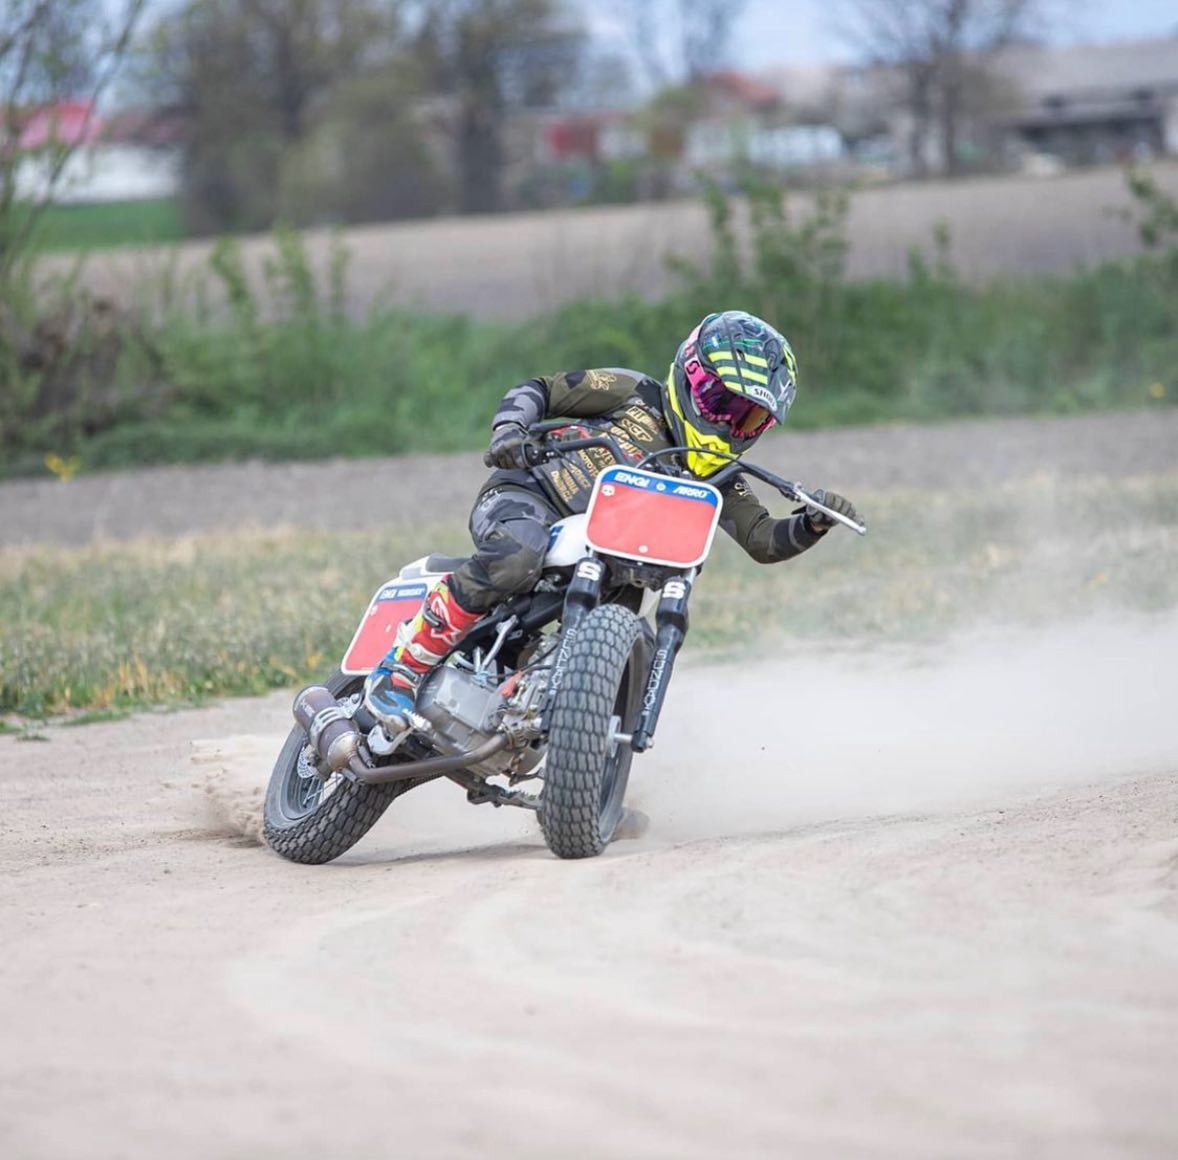 Fast ✊️ & Left 🔄
@maksymilianpawelczak 
—
#sundaymotors #flattrack #moto #motorcycle #ycf